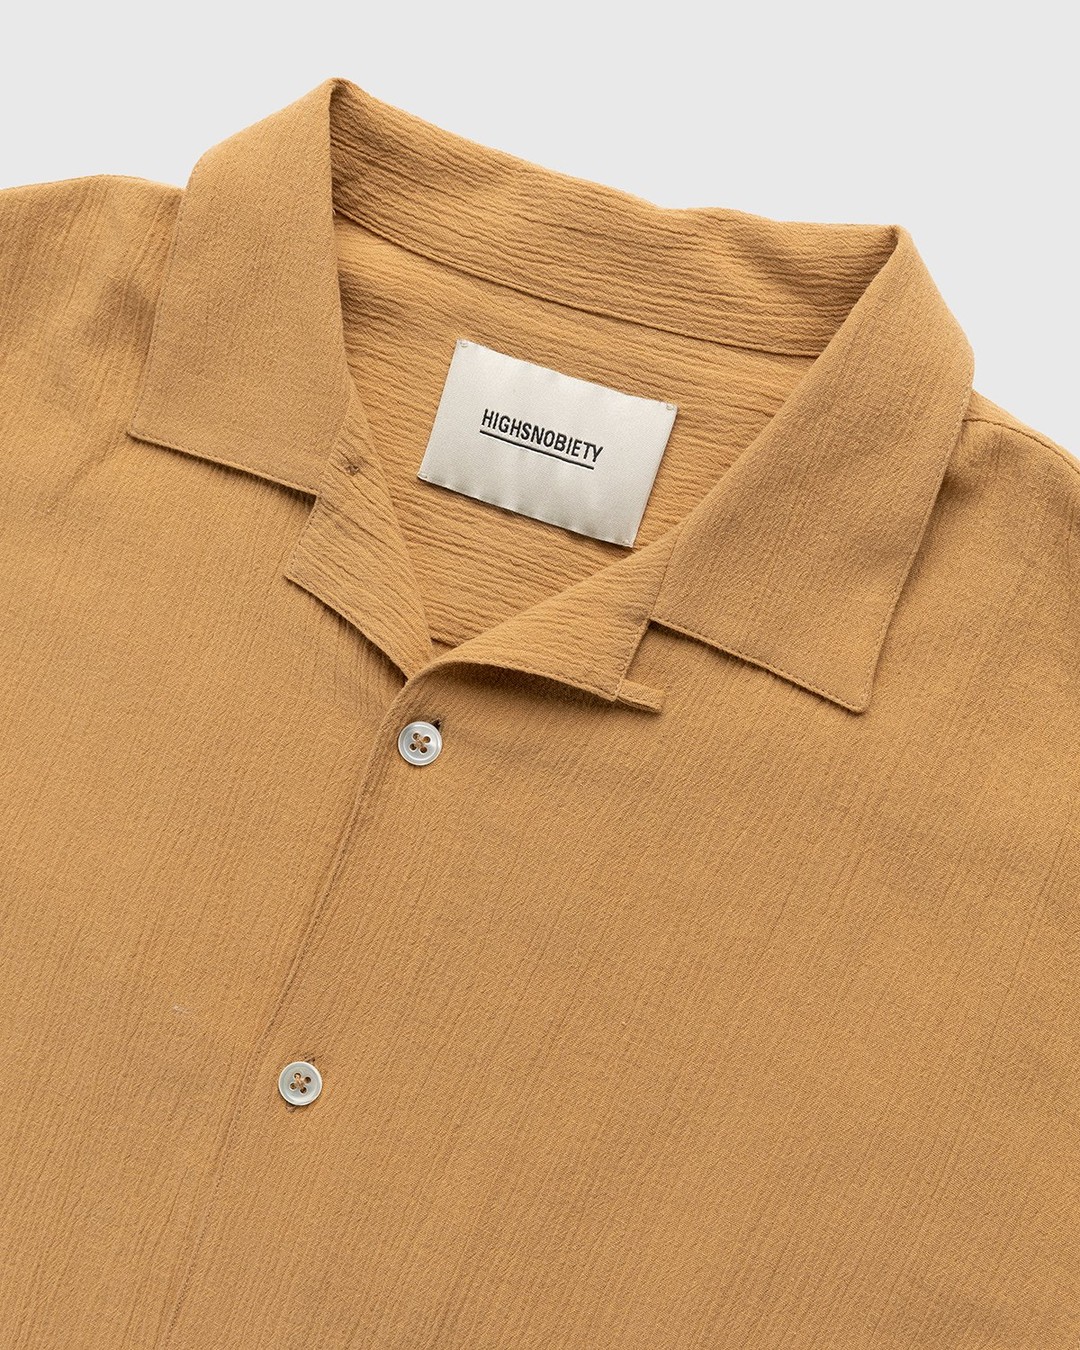 Highsnobiety – Crepe Short Sleeve Shirt Brown - Shortsleeve Shirts - Brown - Image 4